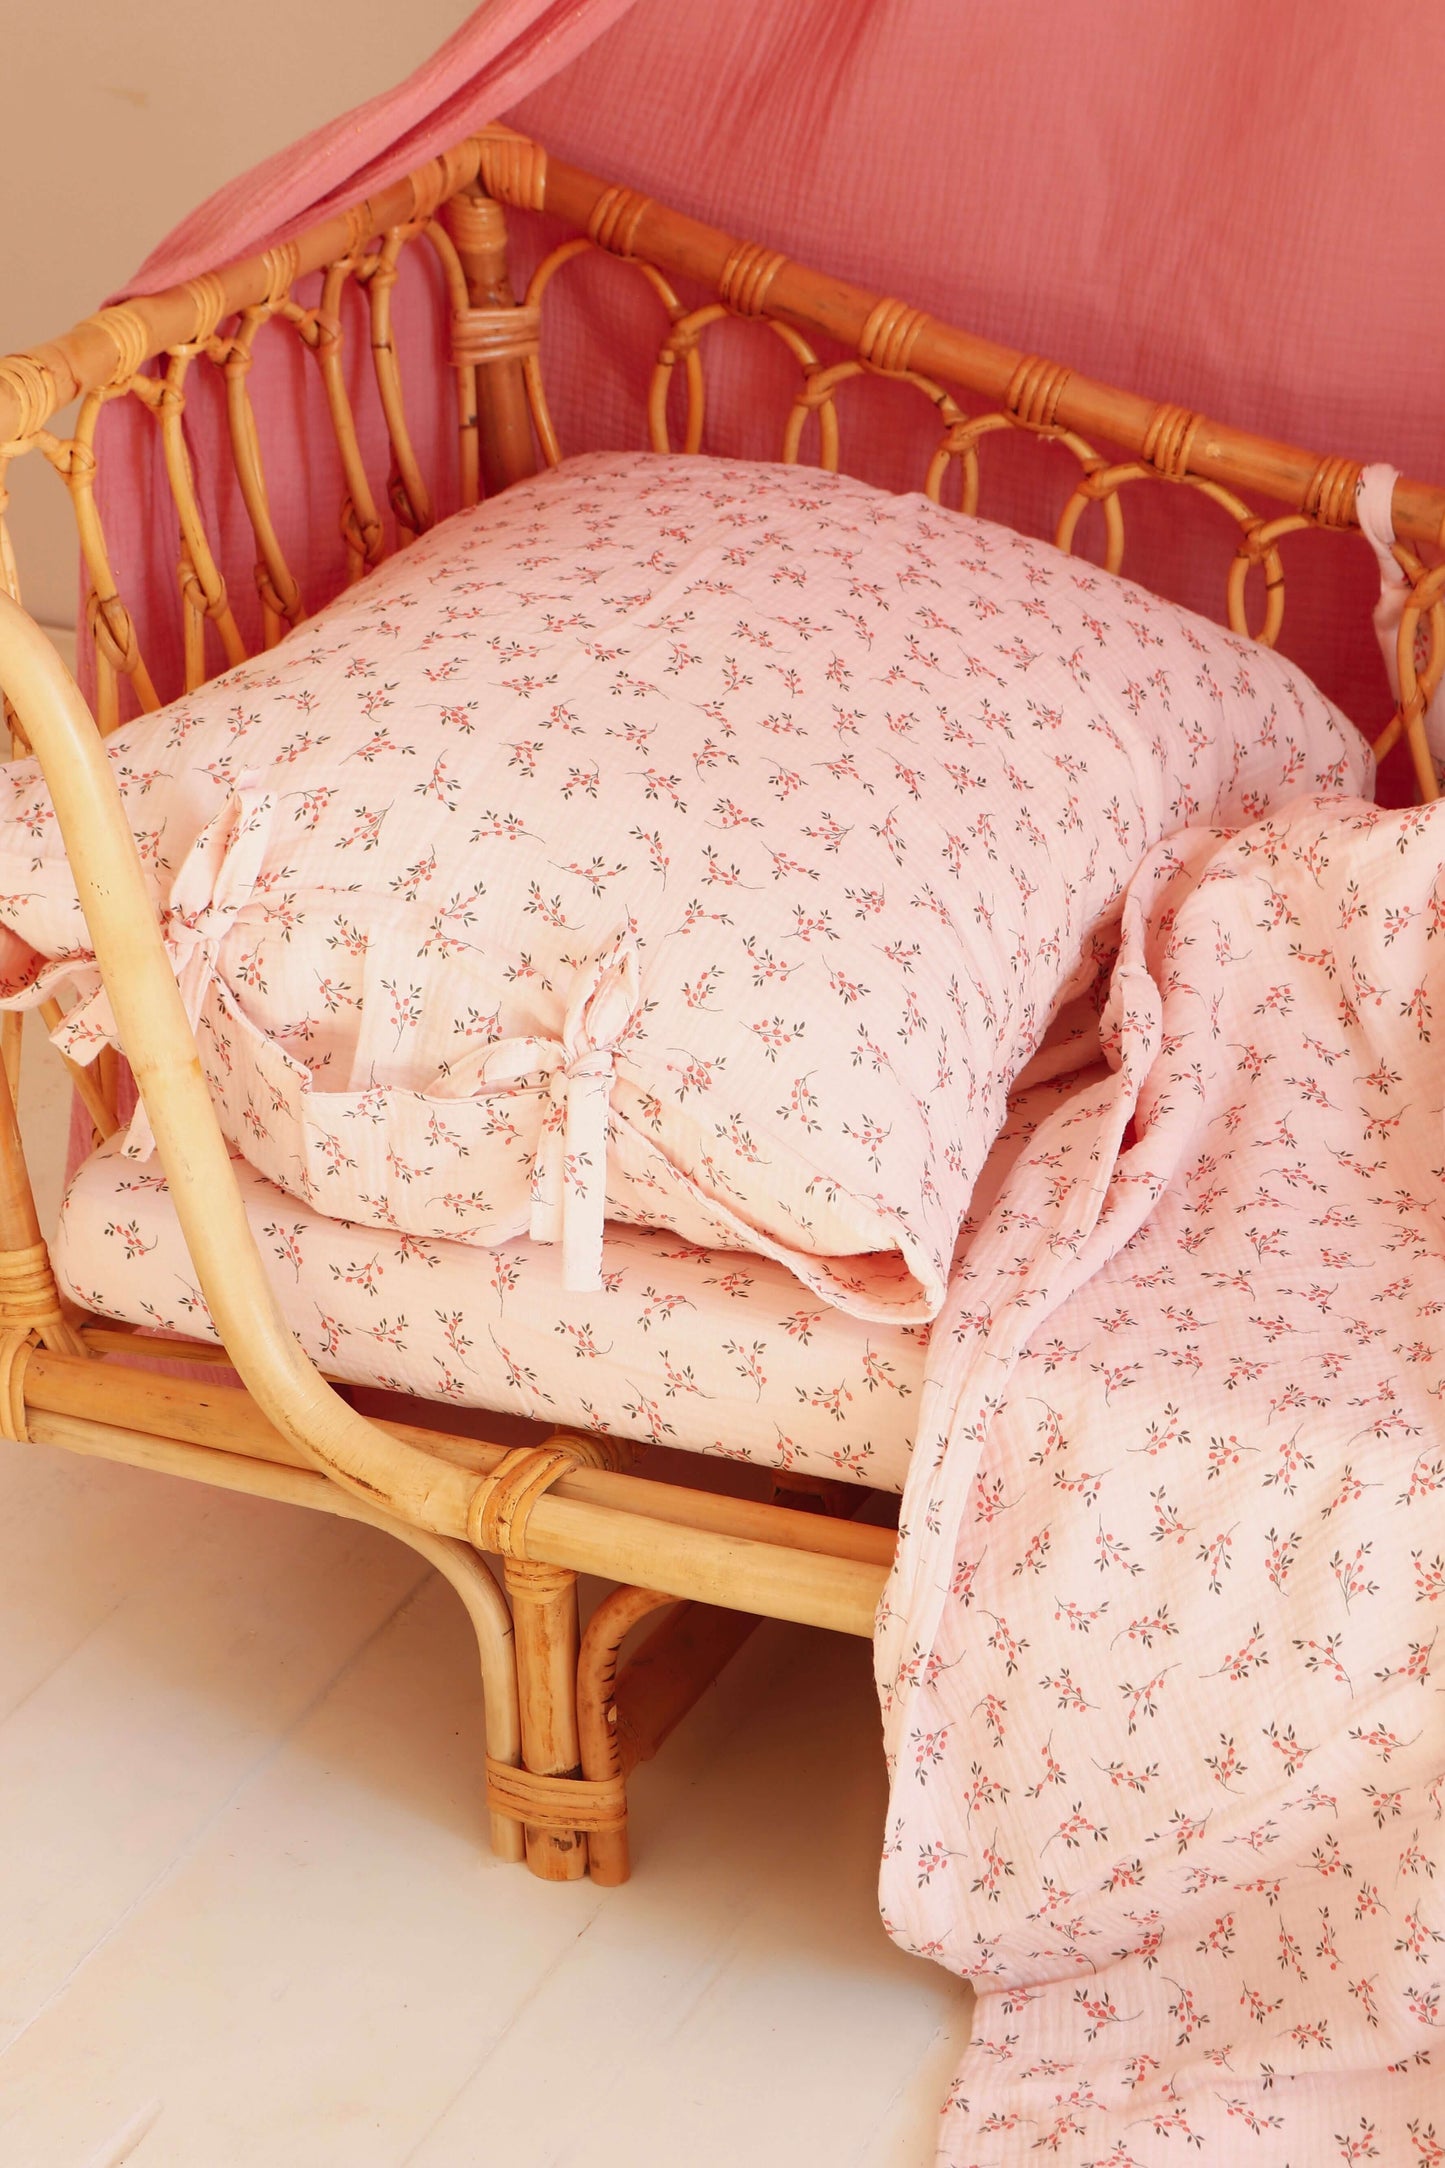 Matuu - Pinky natural - bedding sets, duvet cover, case pillow